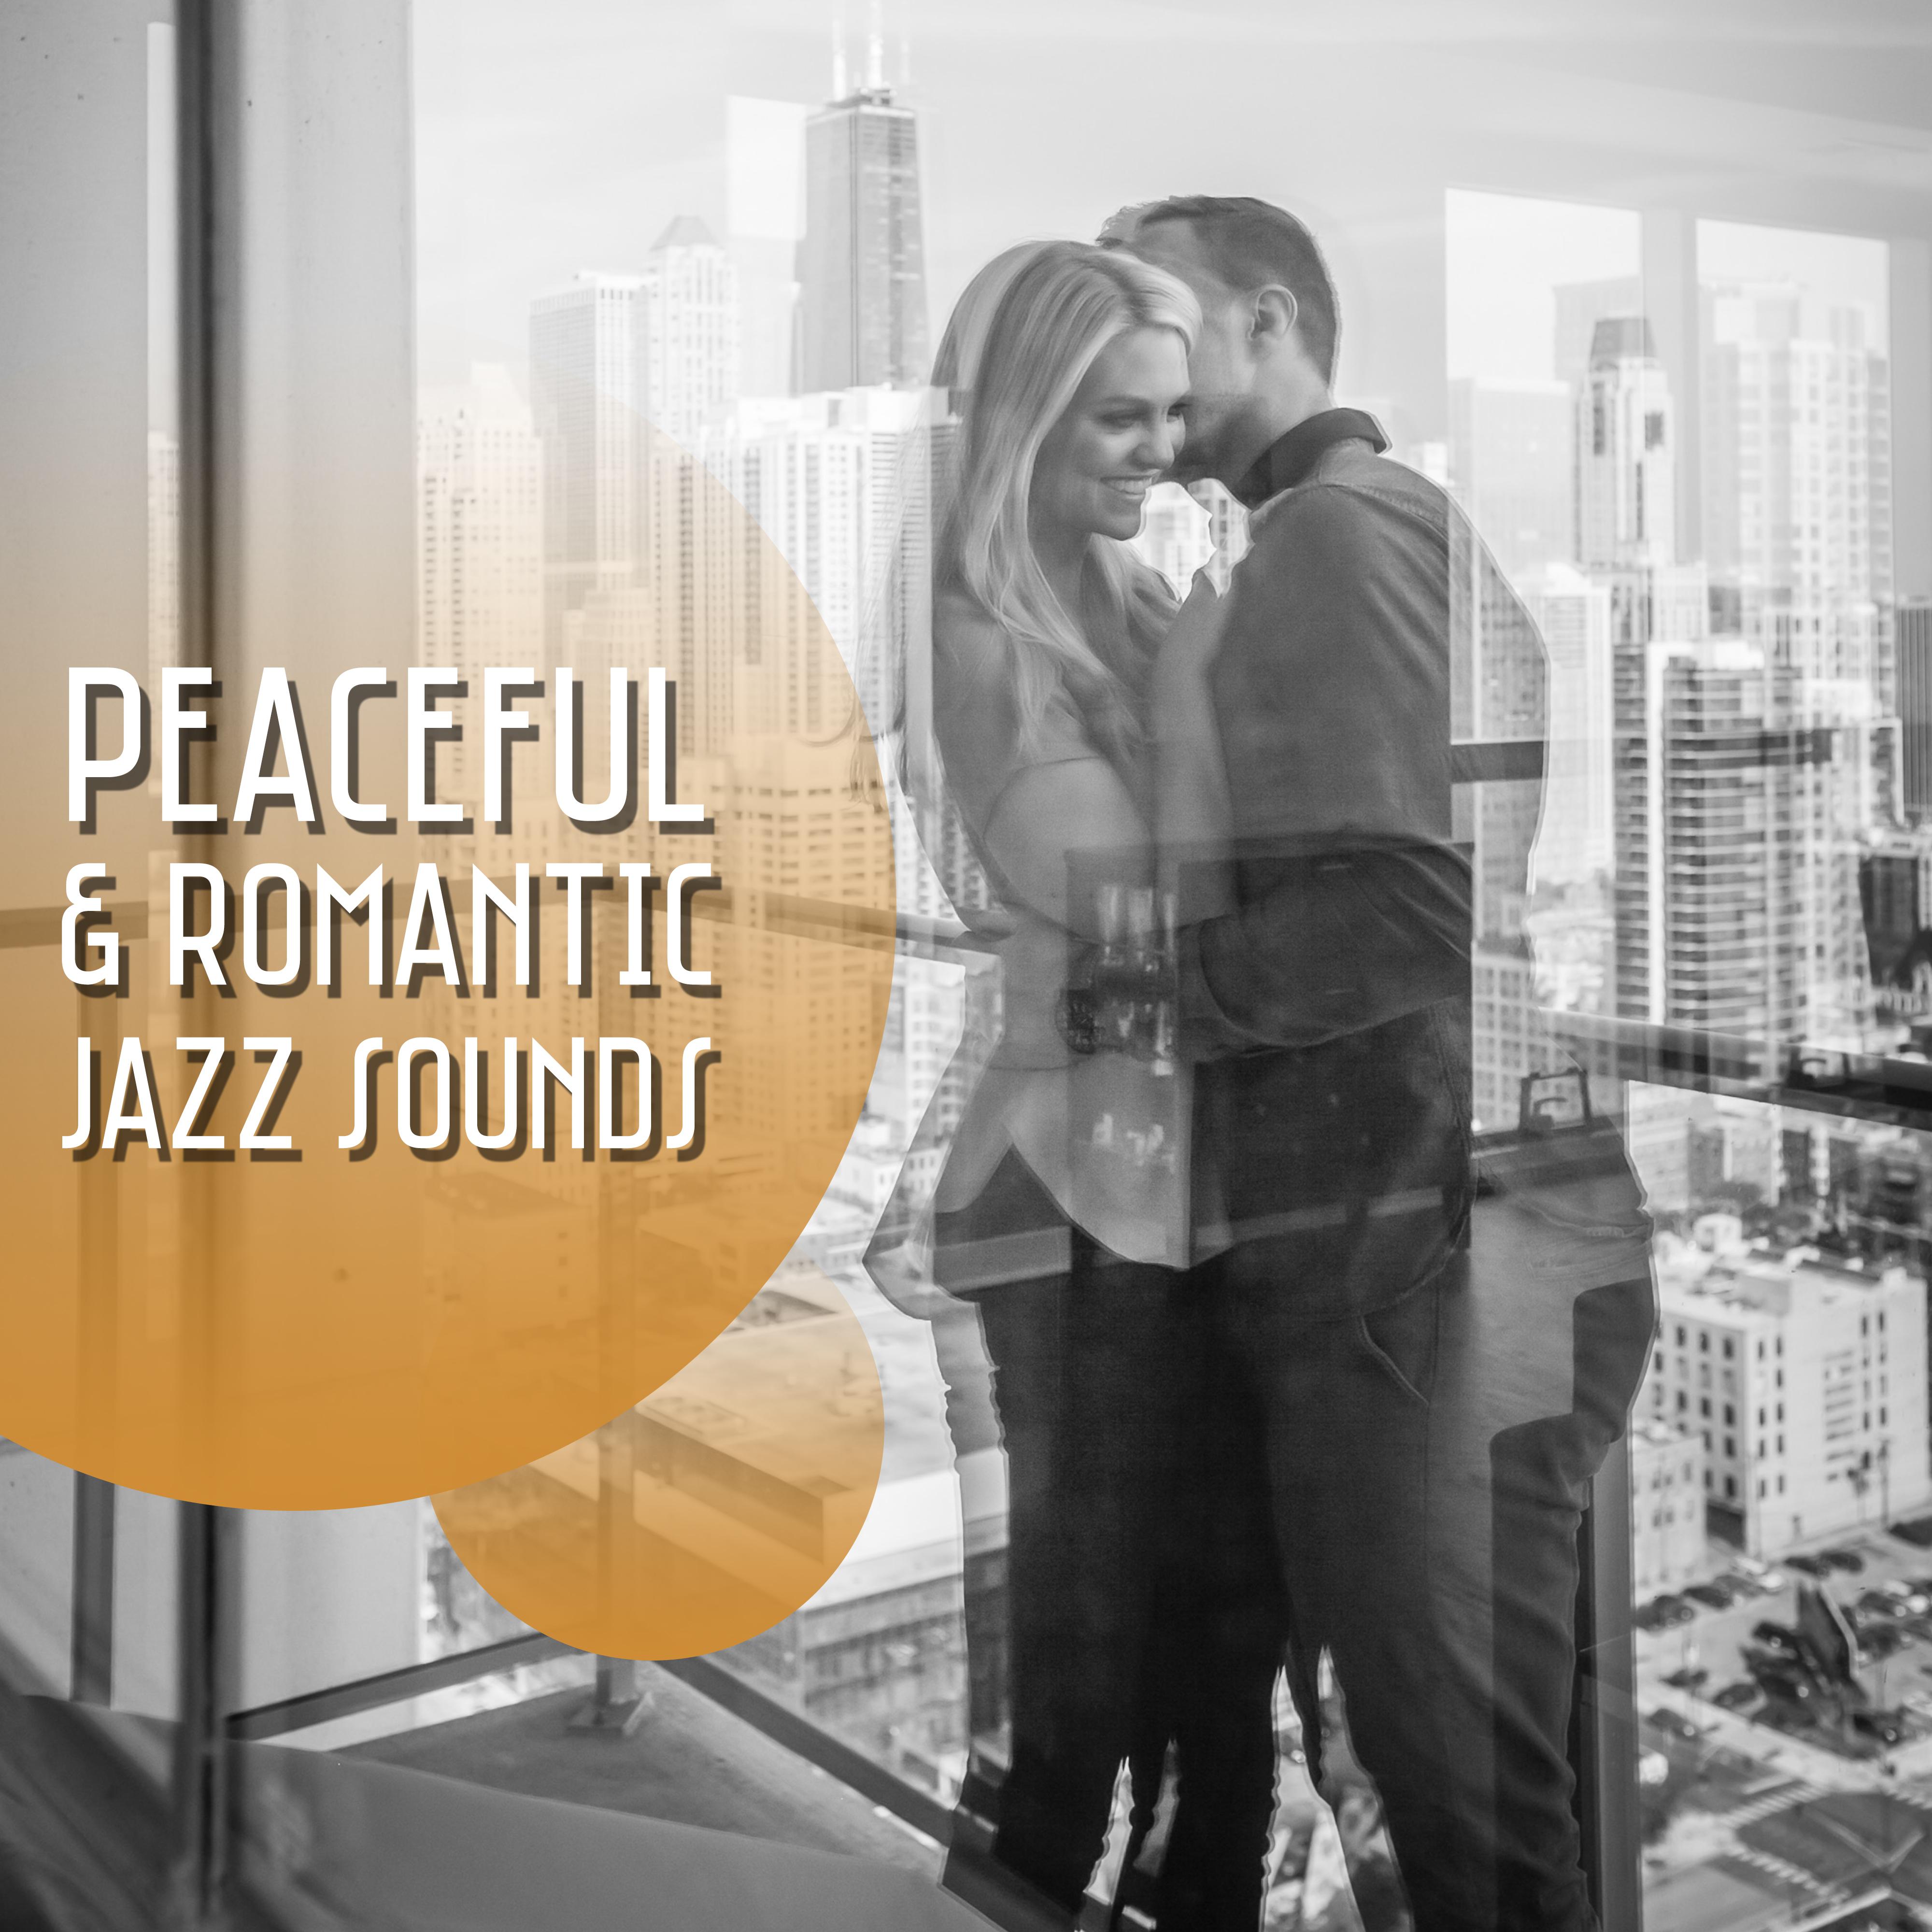 Peaceful & Romantic Jazz Sounds